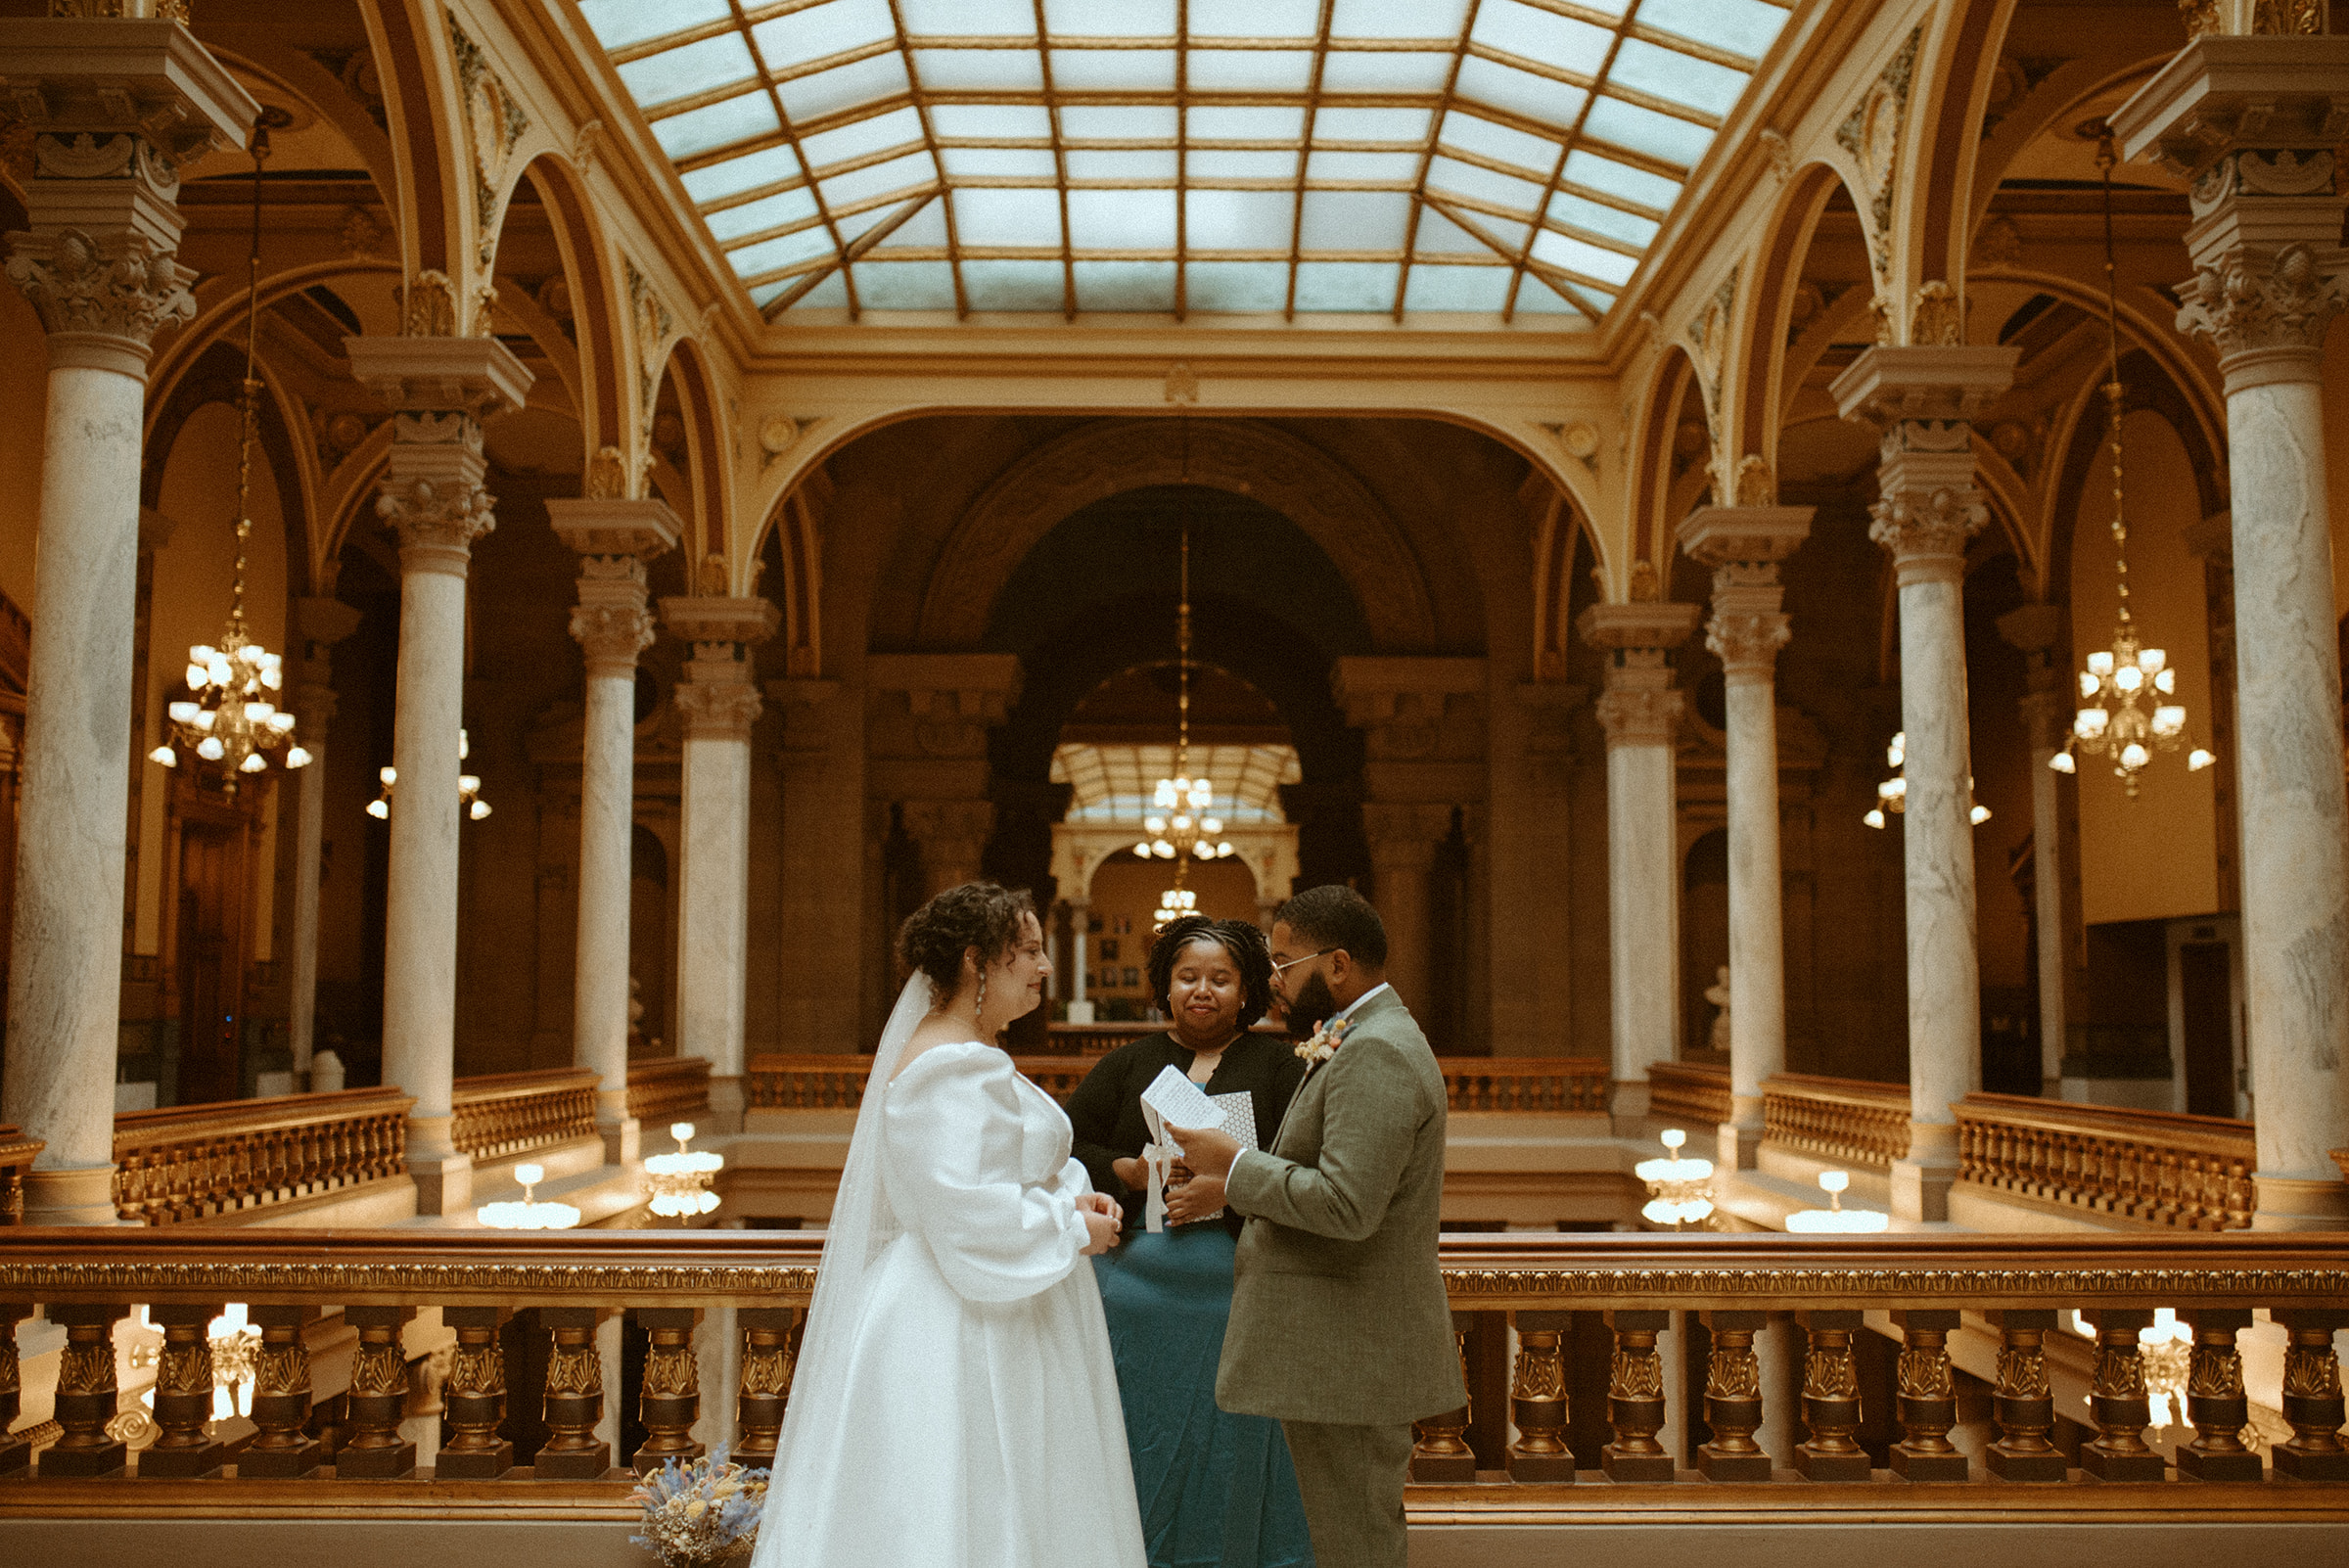 Indianapolis State House Wedding ceremony